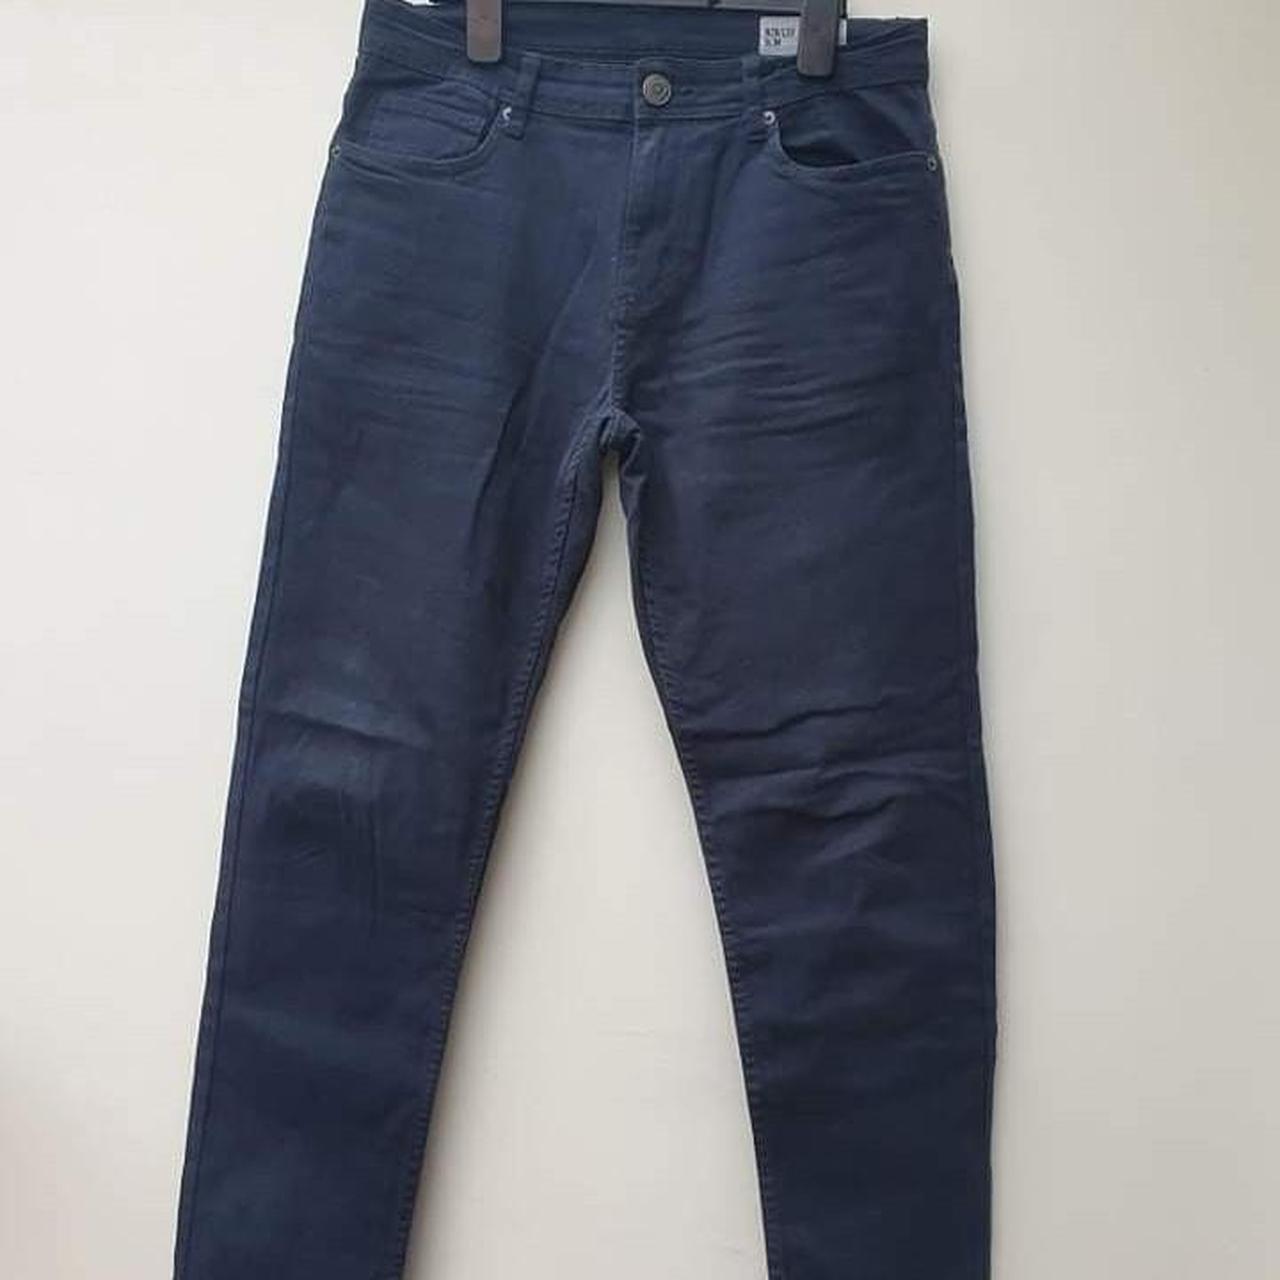 Denim Co. Slim fit navy jeans Size 30S All items... - Depop